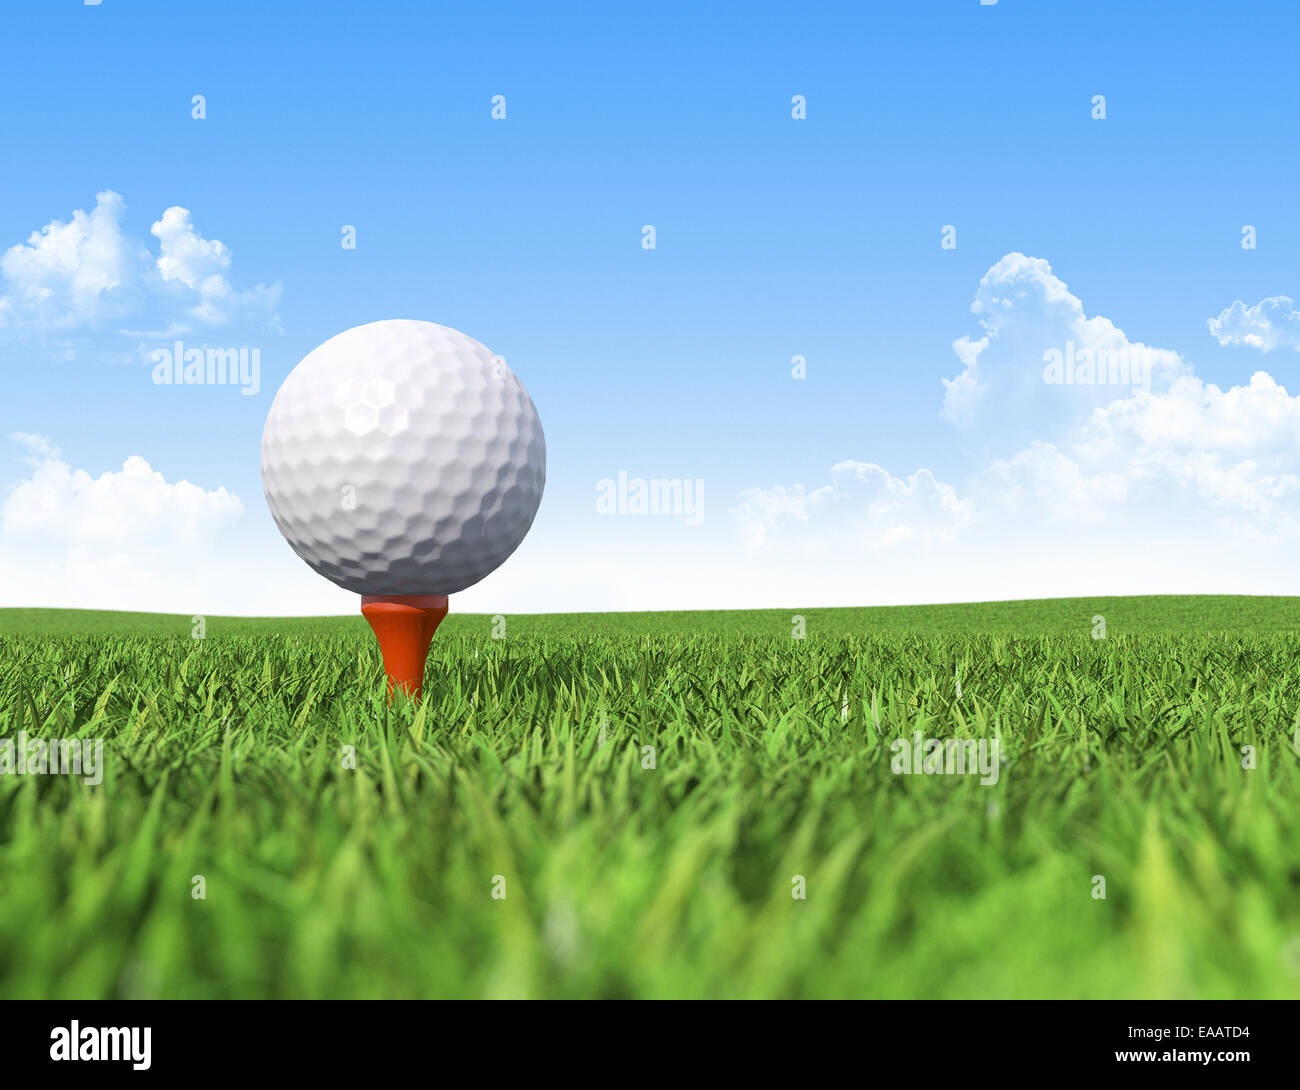 Golf ball on tee in grass Stock Photo